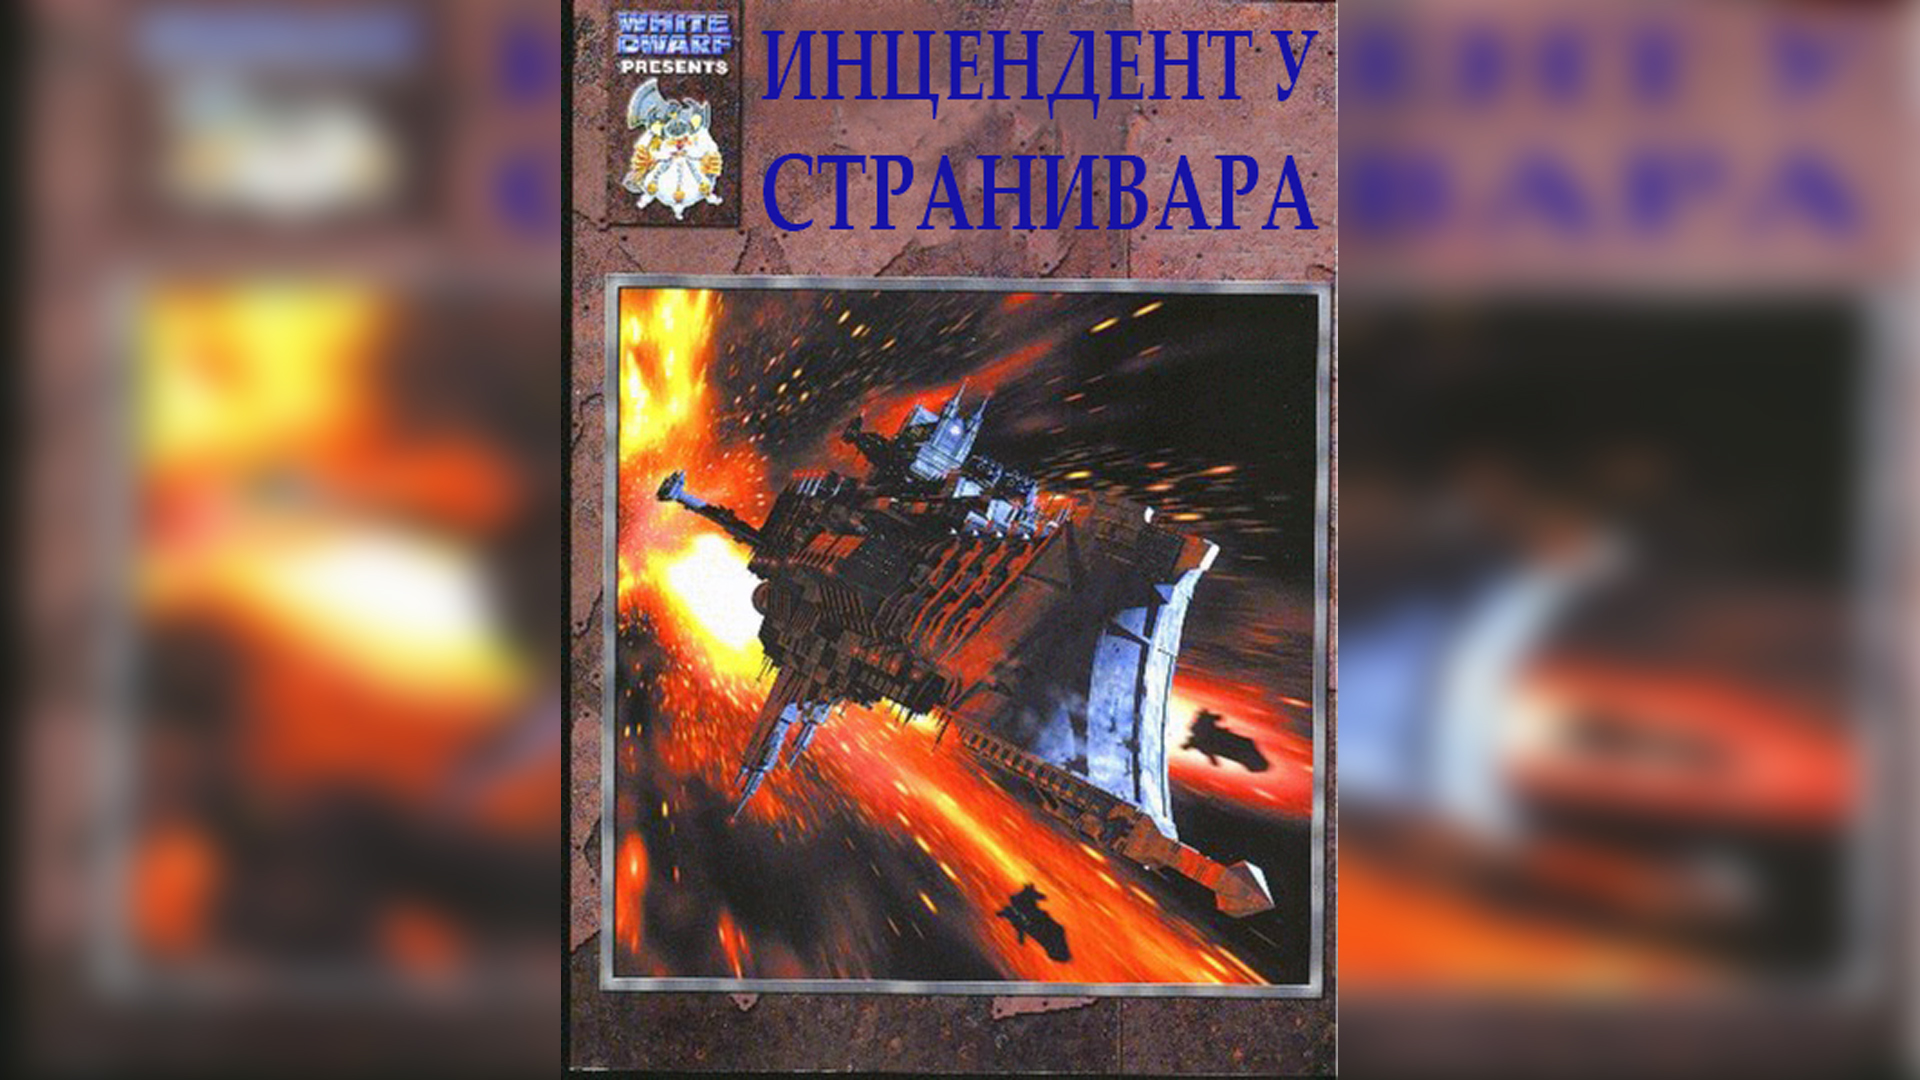 Инцидент у Странивара / "Incident at Stranivar" (2000) by TheStation Warhammer